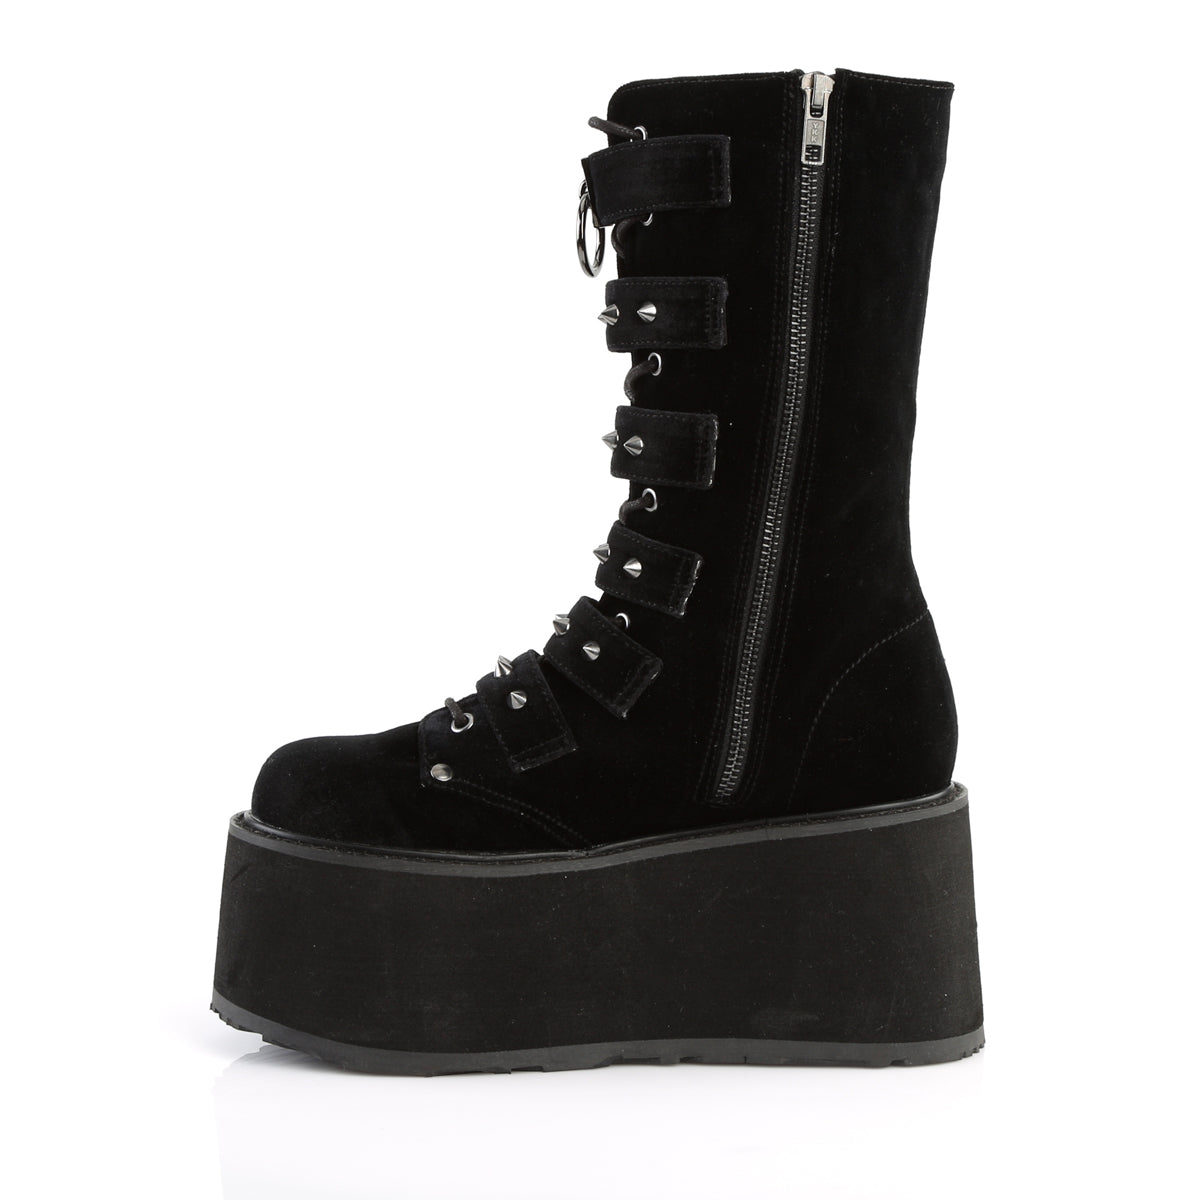 DAMNED-225 Demonia Black Velvet Women's Mid-Calf & Knee High Boots [Demonia Cult Alternative Footwear]